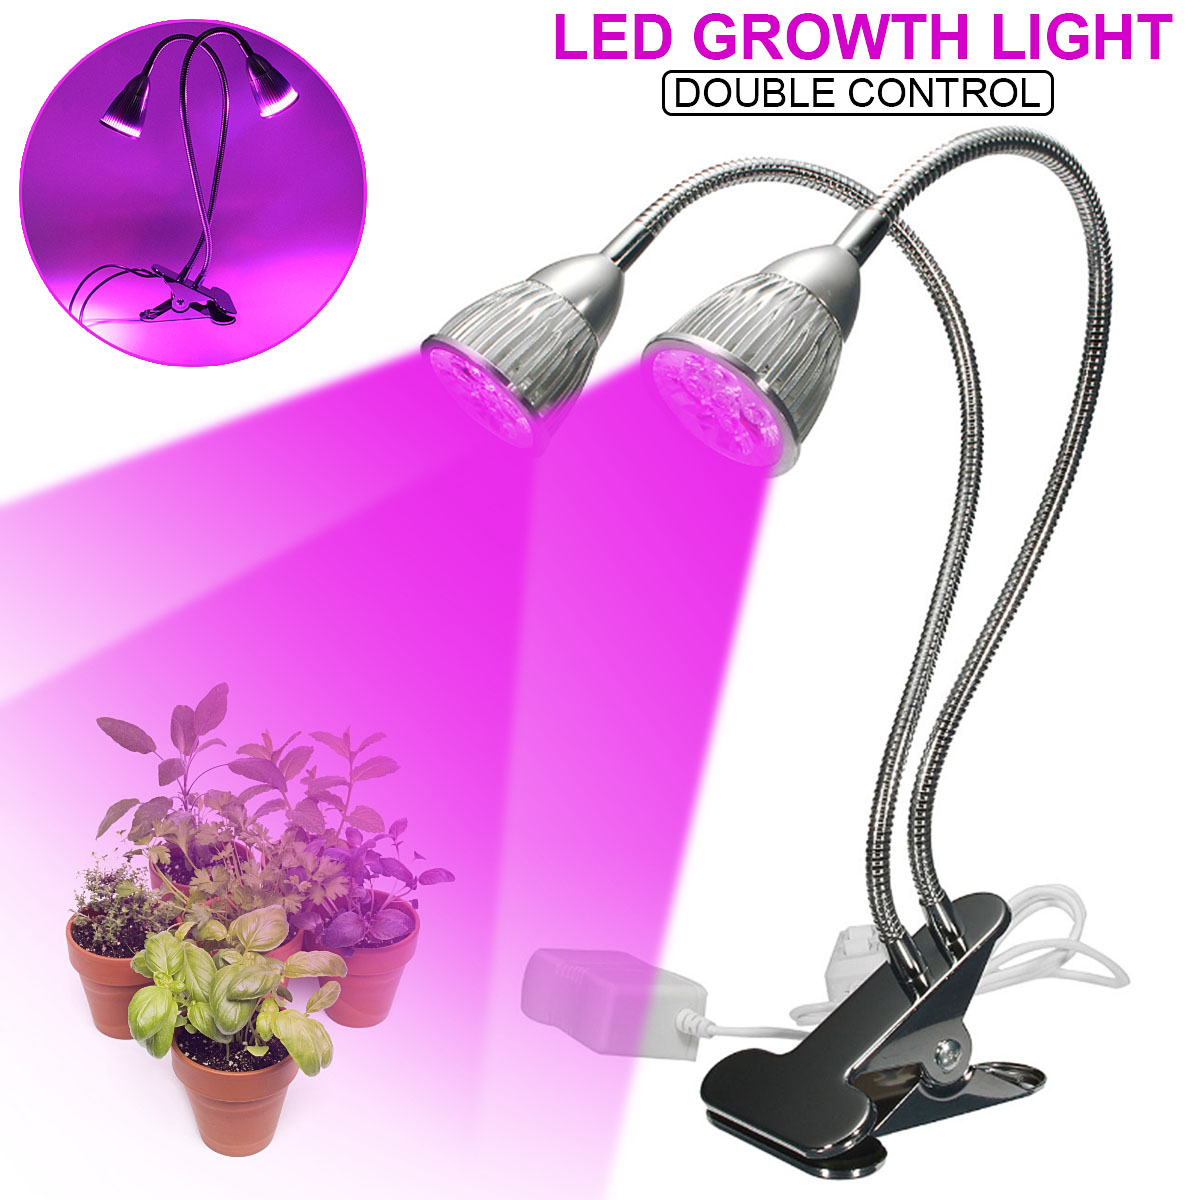 10W-Dual-Head-Full-Spectrum-LED-Grow-Light-Clip-Kit-for-Indoor-Plant-Hydroponics-US-Plug-110-240V-1689433-1